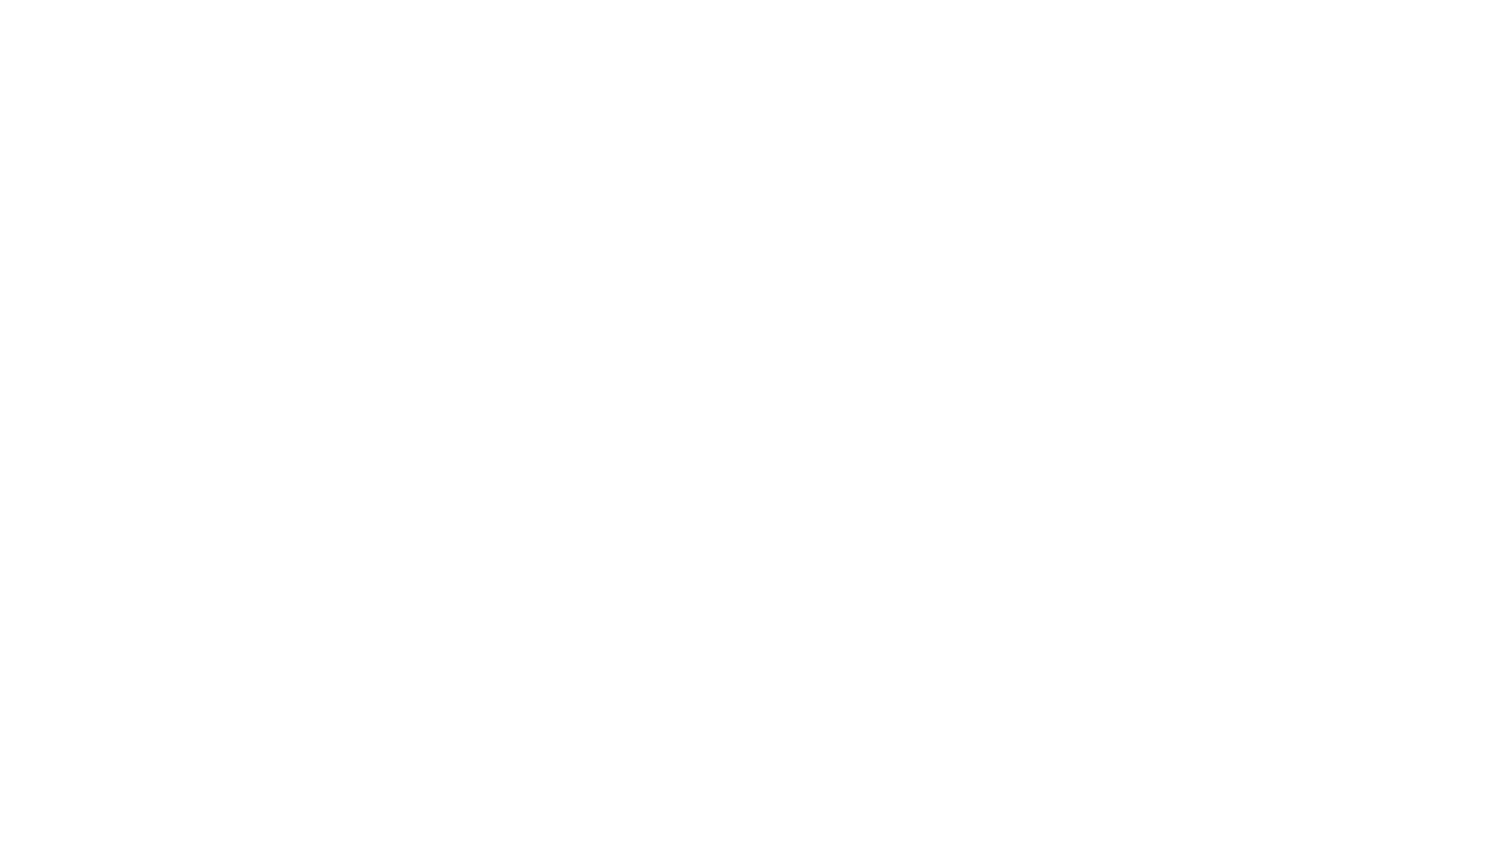 CSN - THE INTERSTELLAR COLLECTION